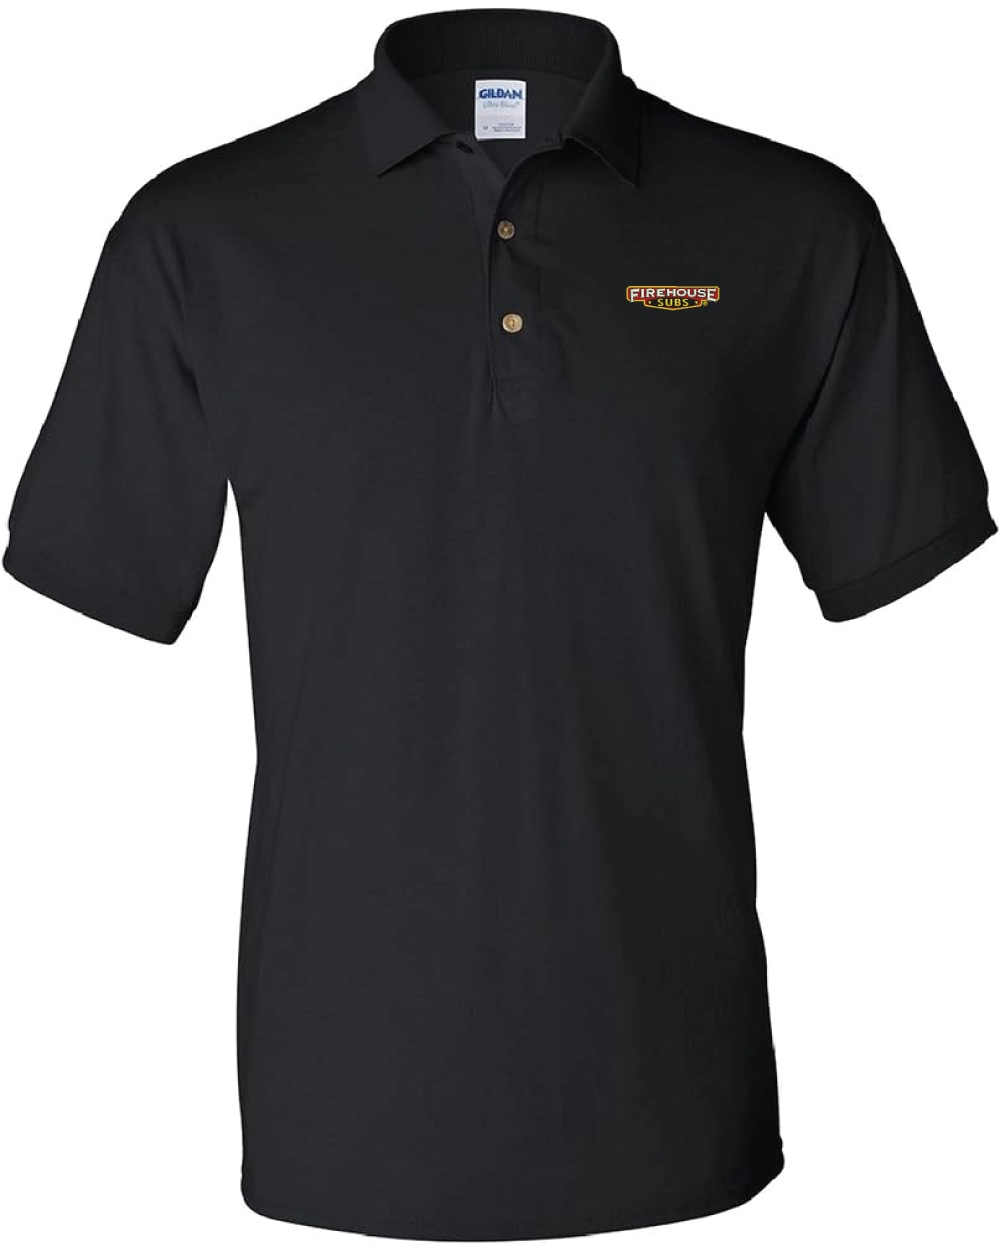 Firehouse Subs. Firehouse Black Polo Shirt